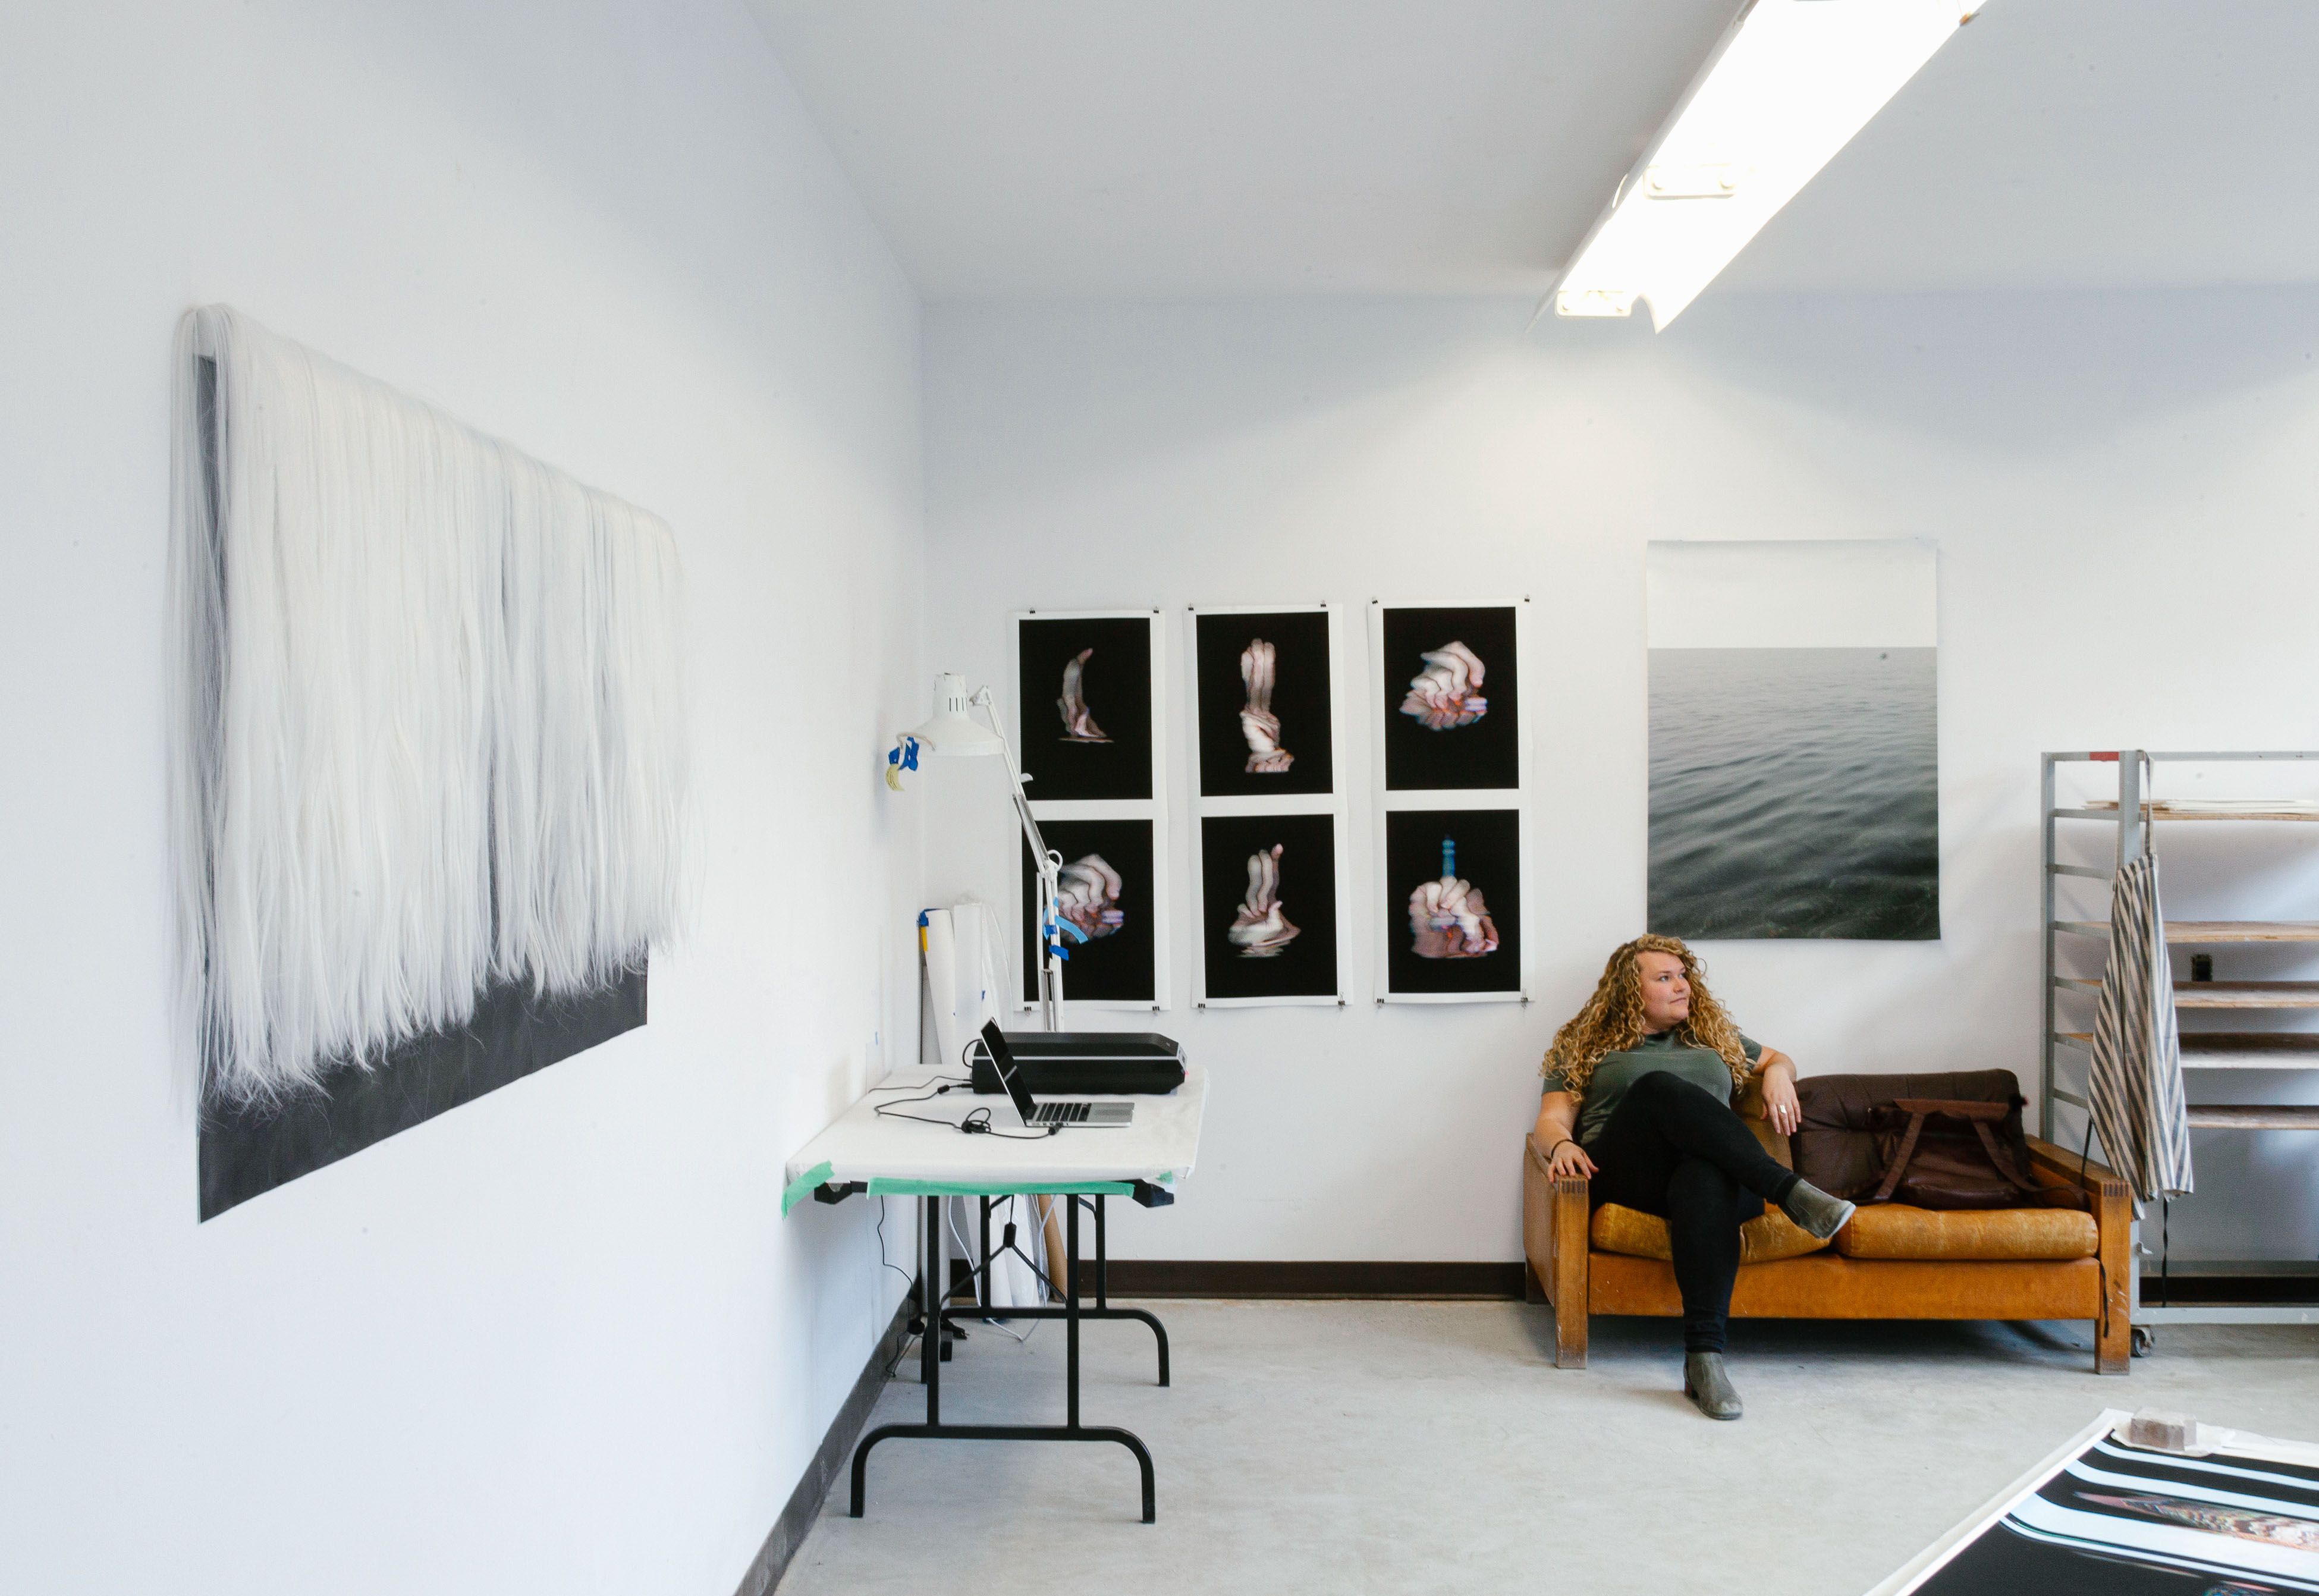 Molly Allen in her Banff Centre Studio with her artwork, 2020.